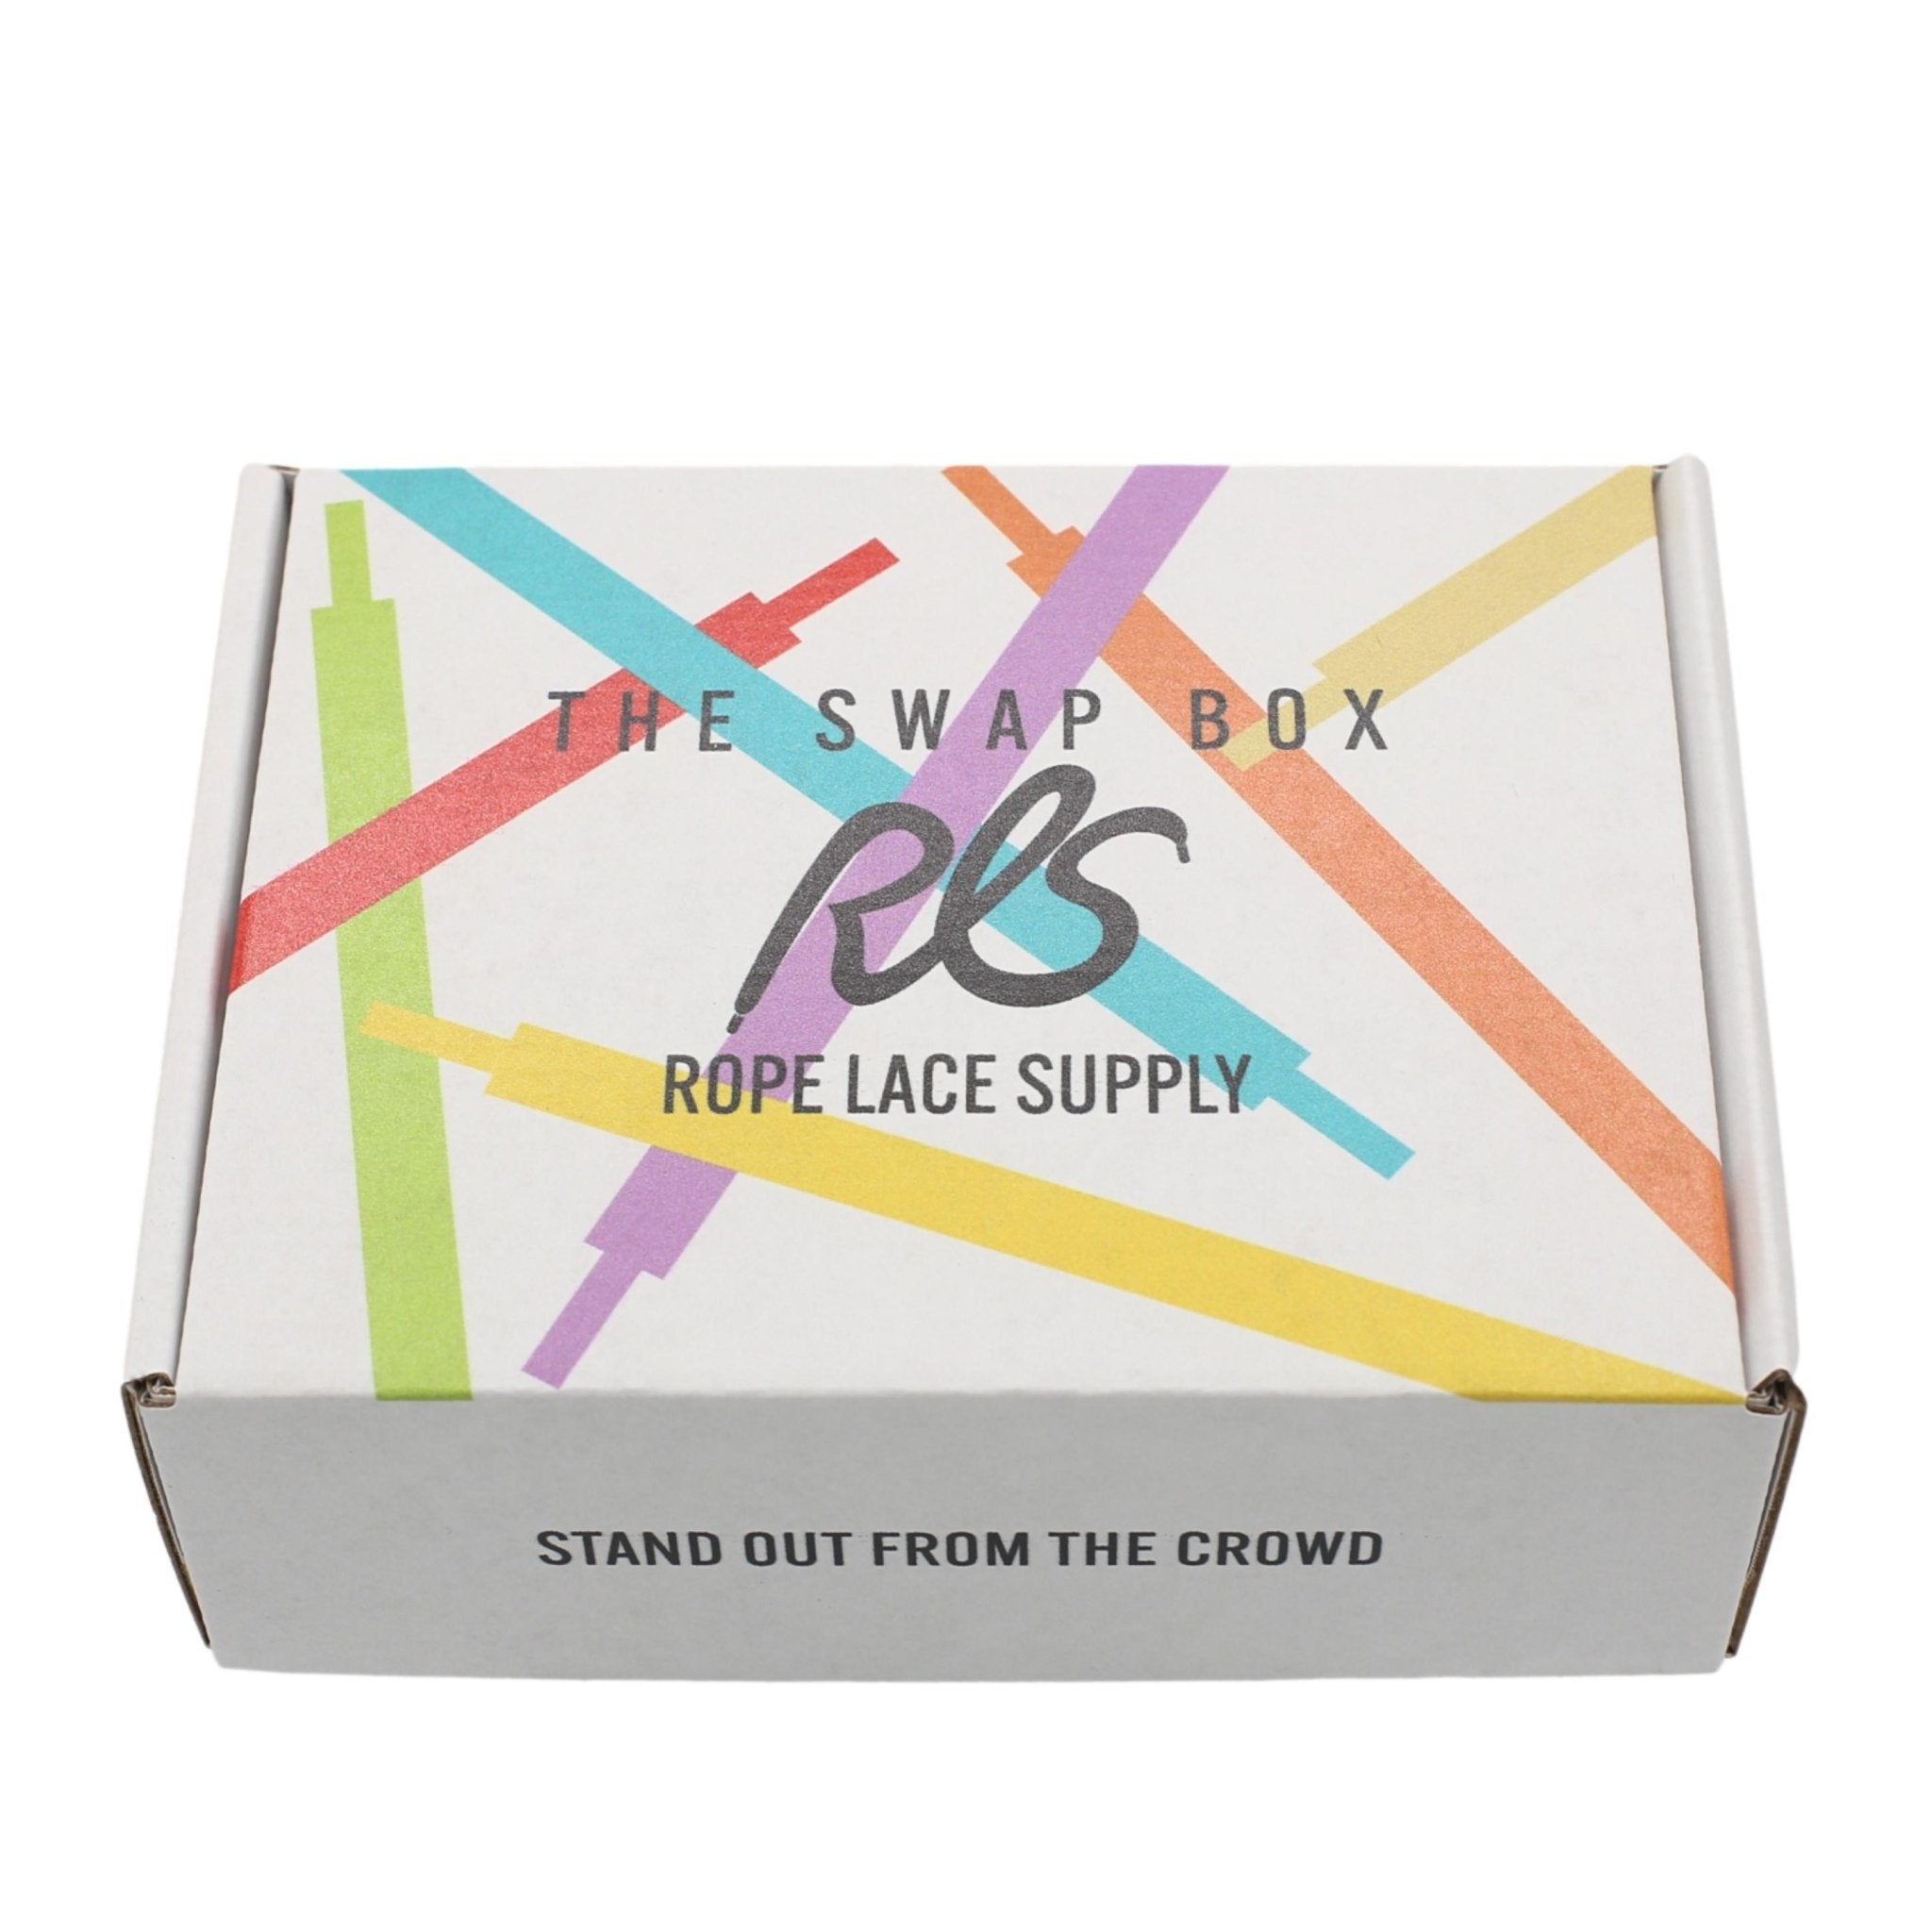 The Jordan Lace Swap Box - Shoe Lace Supply